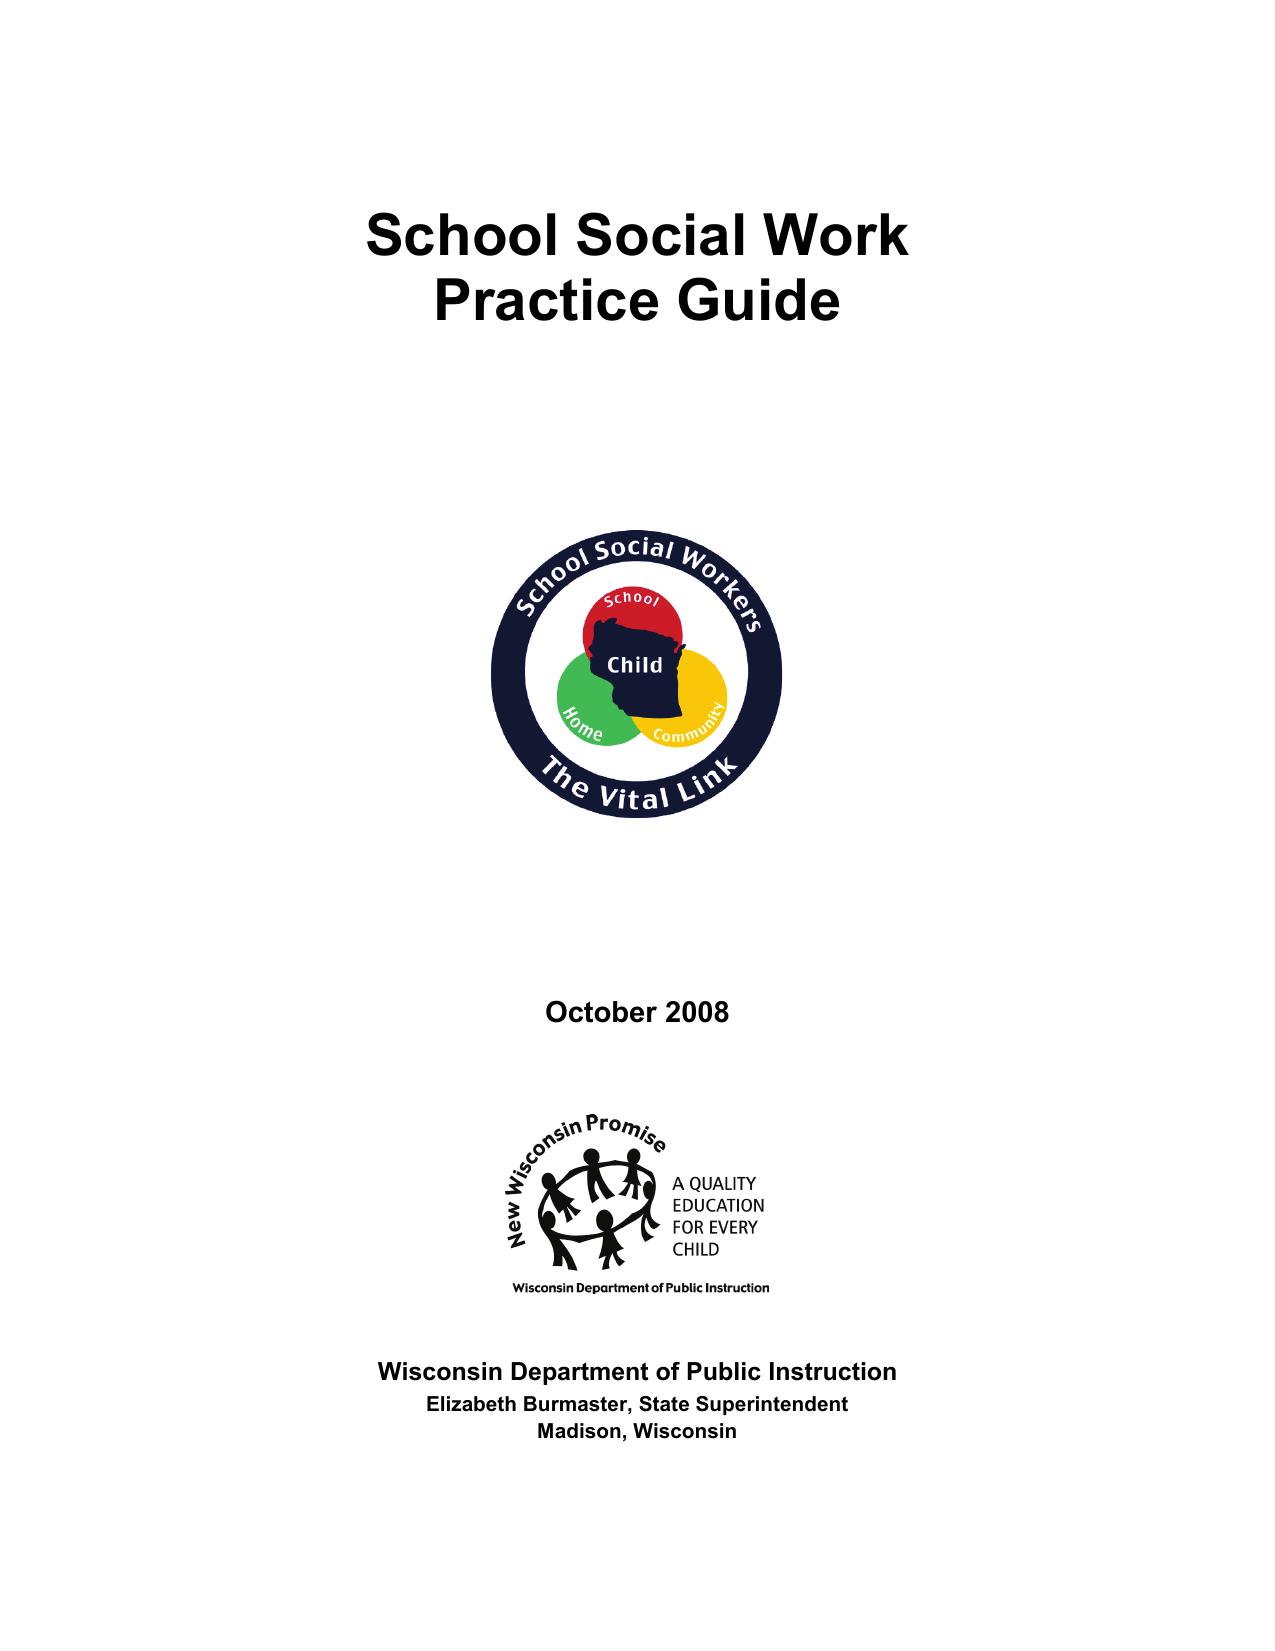 School Social Work Practice Guide 2008